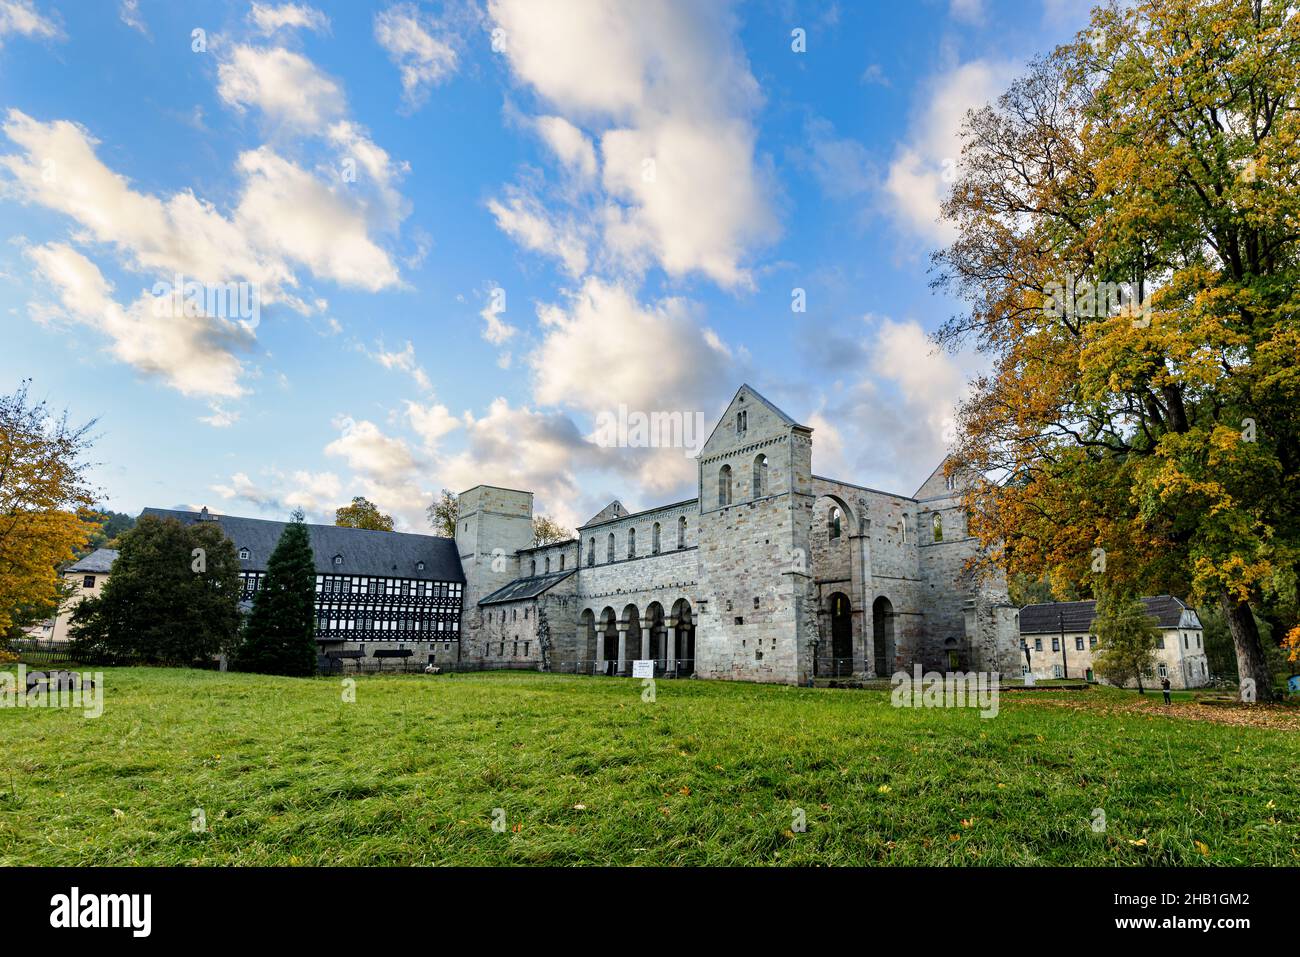 Monastery Paulinzella in Rottenbach, Thuringia, Germany. Stock Photo